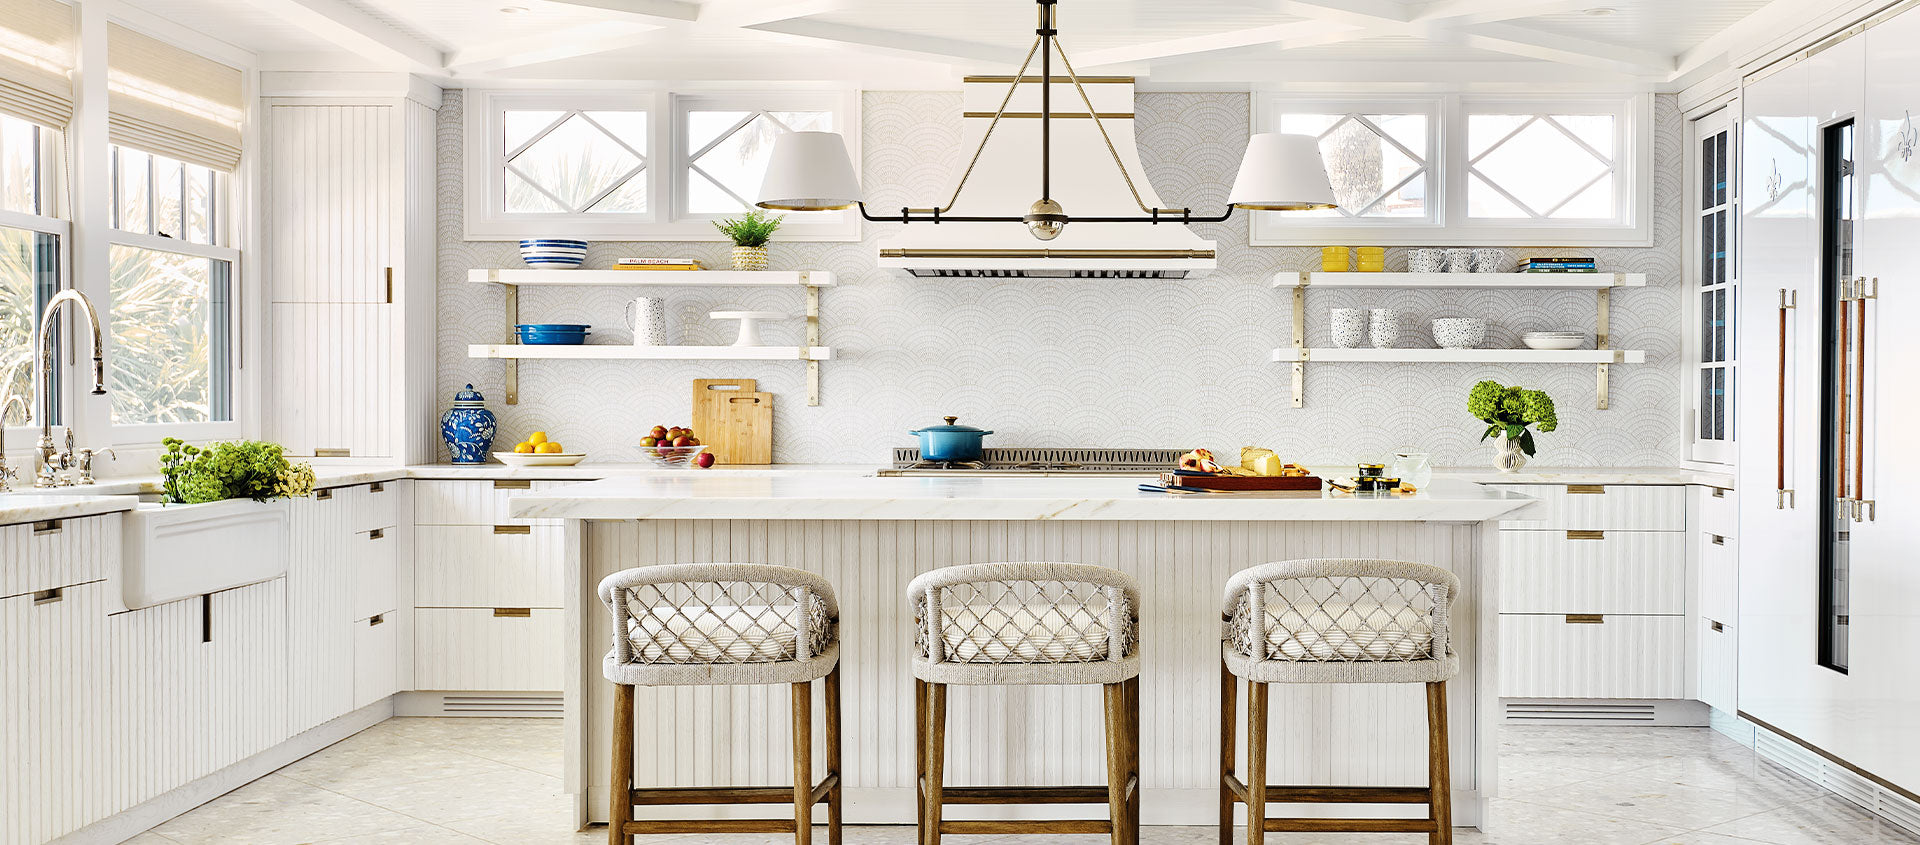 High end kitchen design of white kitchen with white French kitchen ranges, white cupboards, white kitchen cabinets